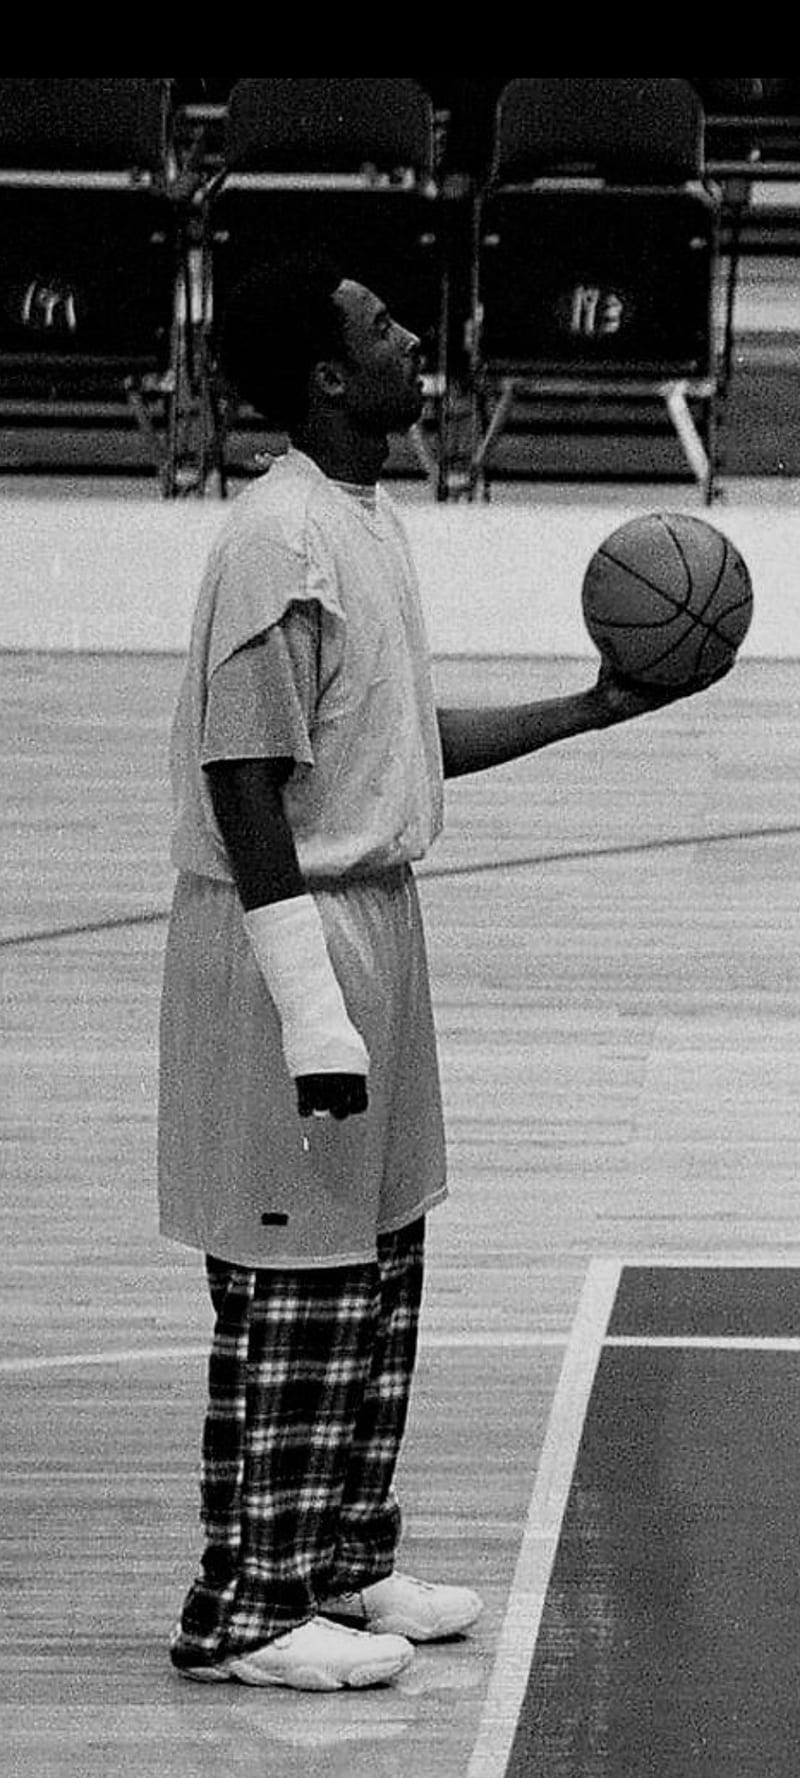 A man in pajamas is holding up basketball - NBA, Kobe Bryant